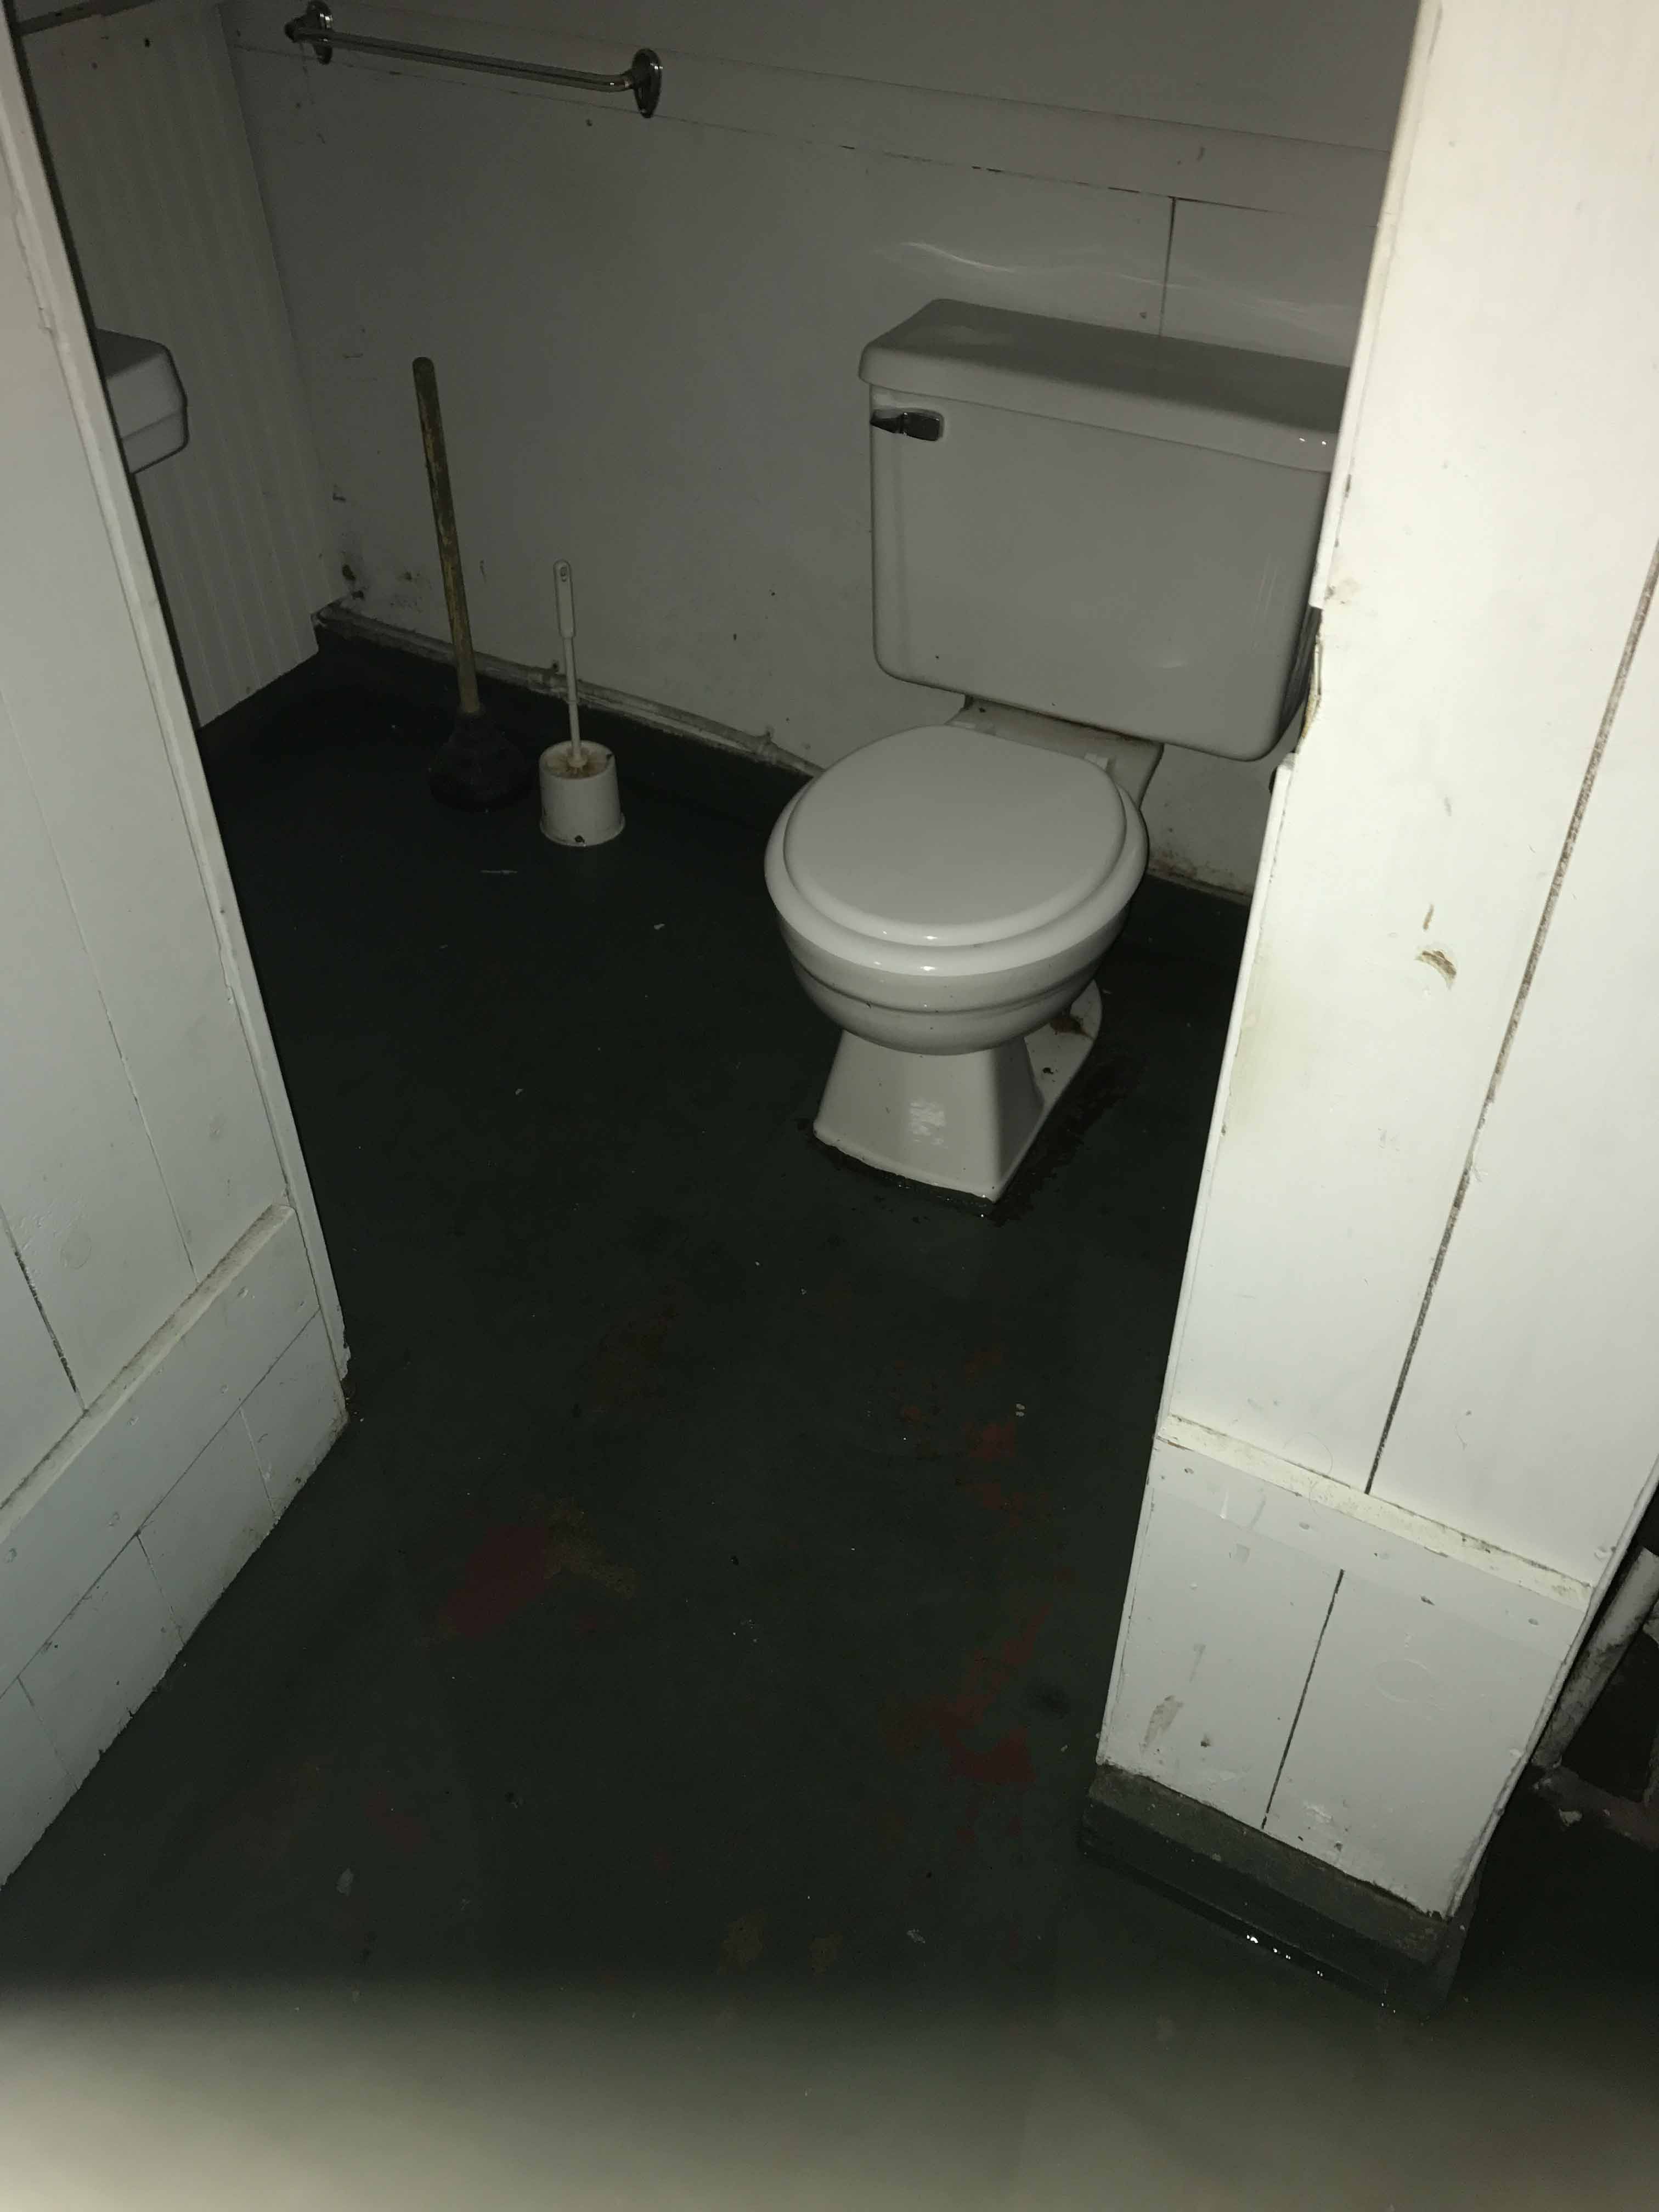 toilet water damage restoration in Jackson michigan United States